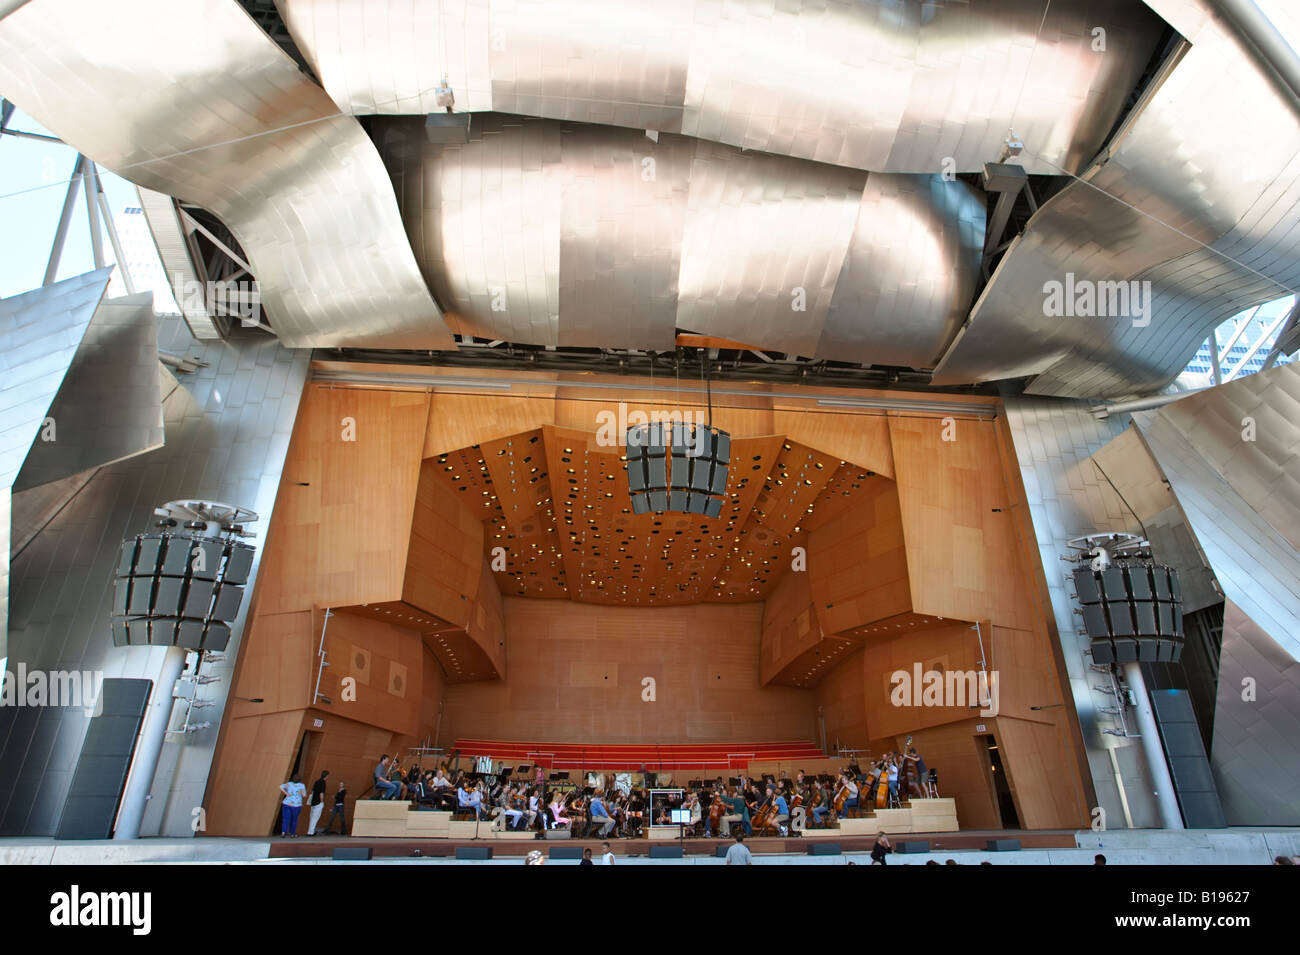 ILLINOIS Chicago Pritzker Pavilion modern architecture Frank Gehry curving steel panels Millennium Park stage Stock Photo